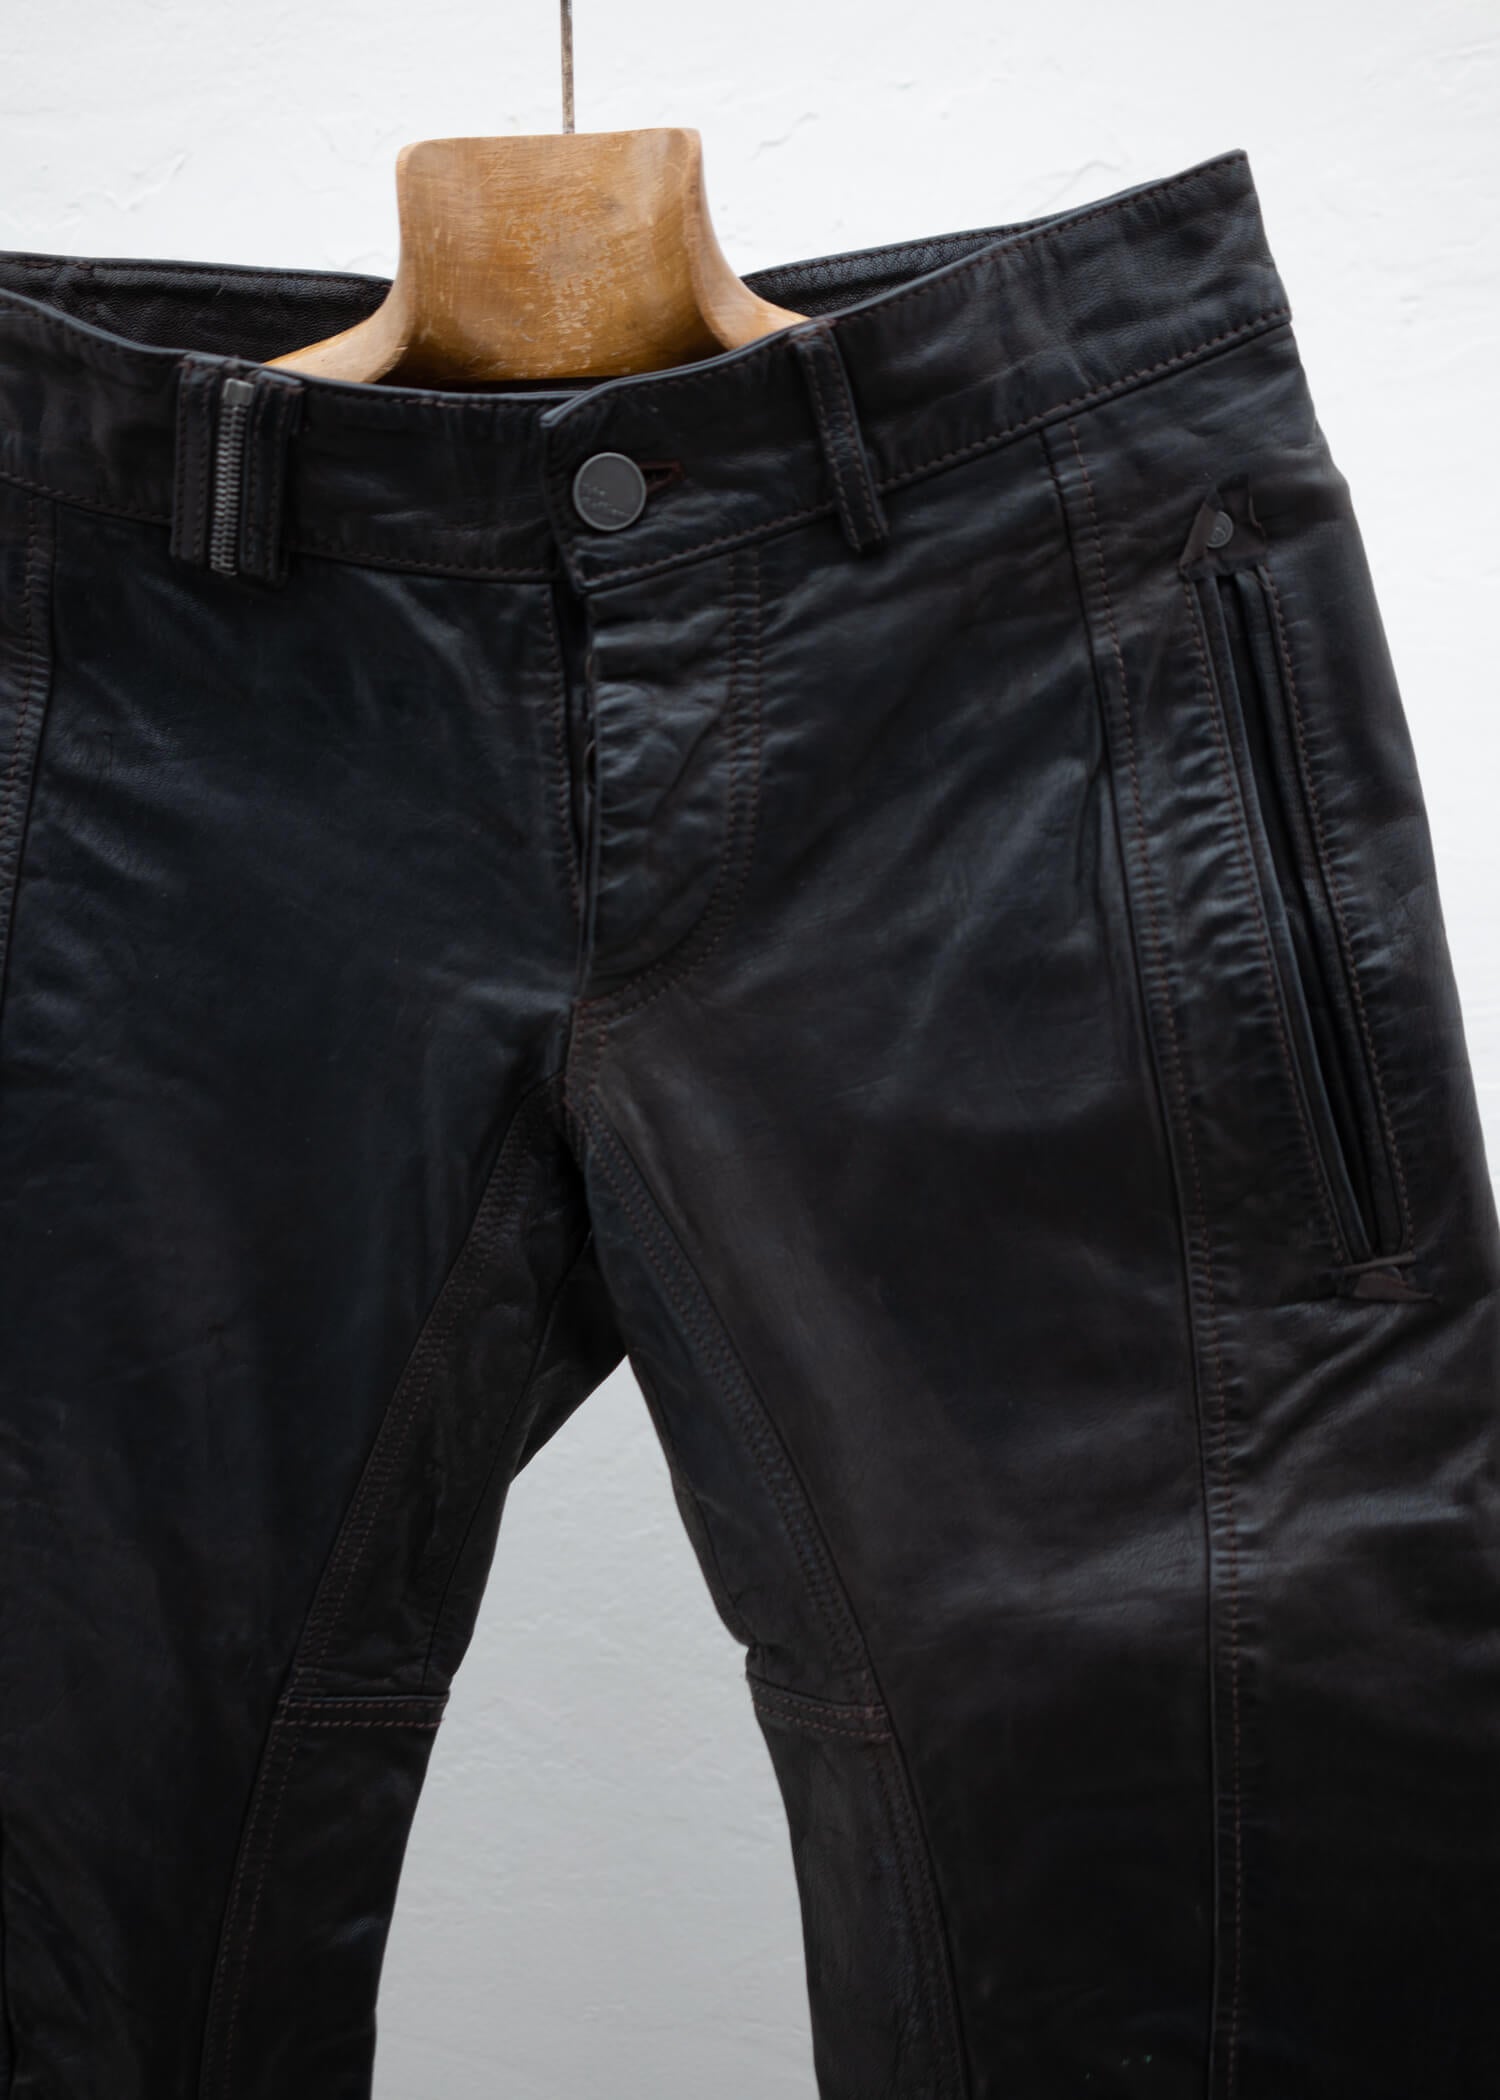 John Galliano Goat Leather Pants